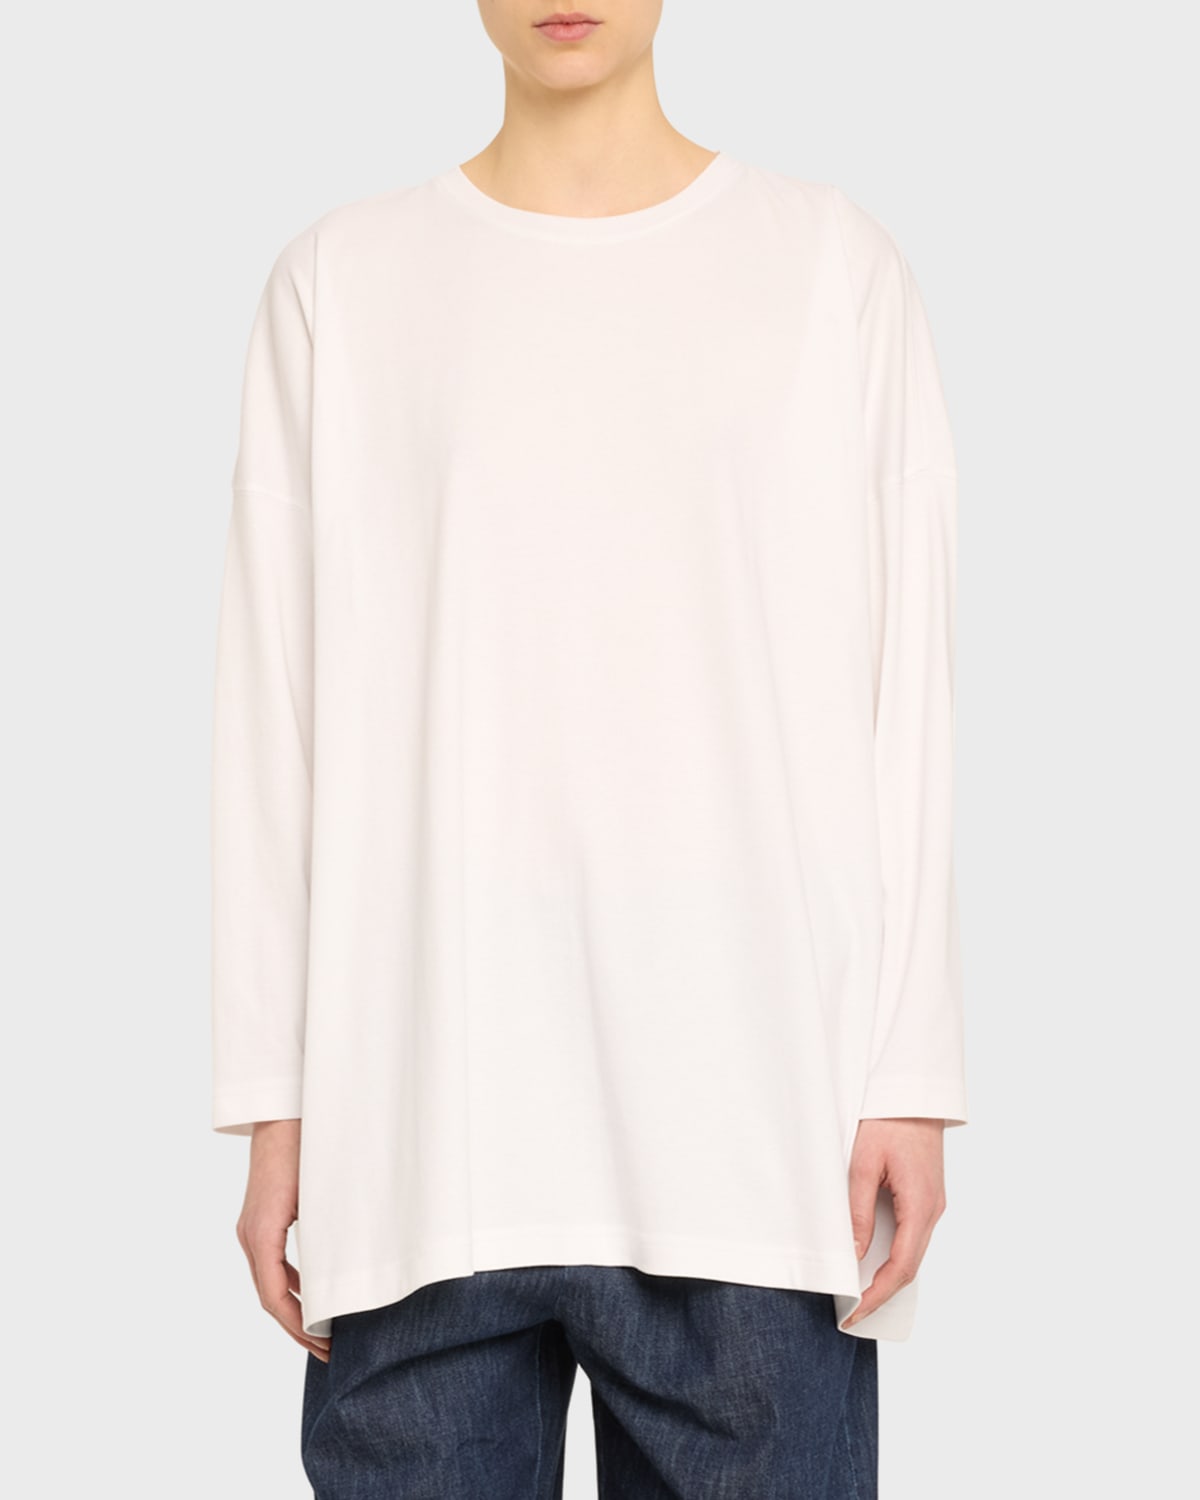 Eskandar Round Neck Long Sleeve Cotton T-shirt In White